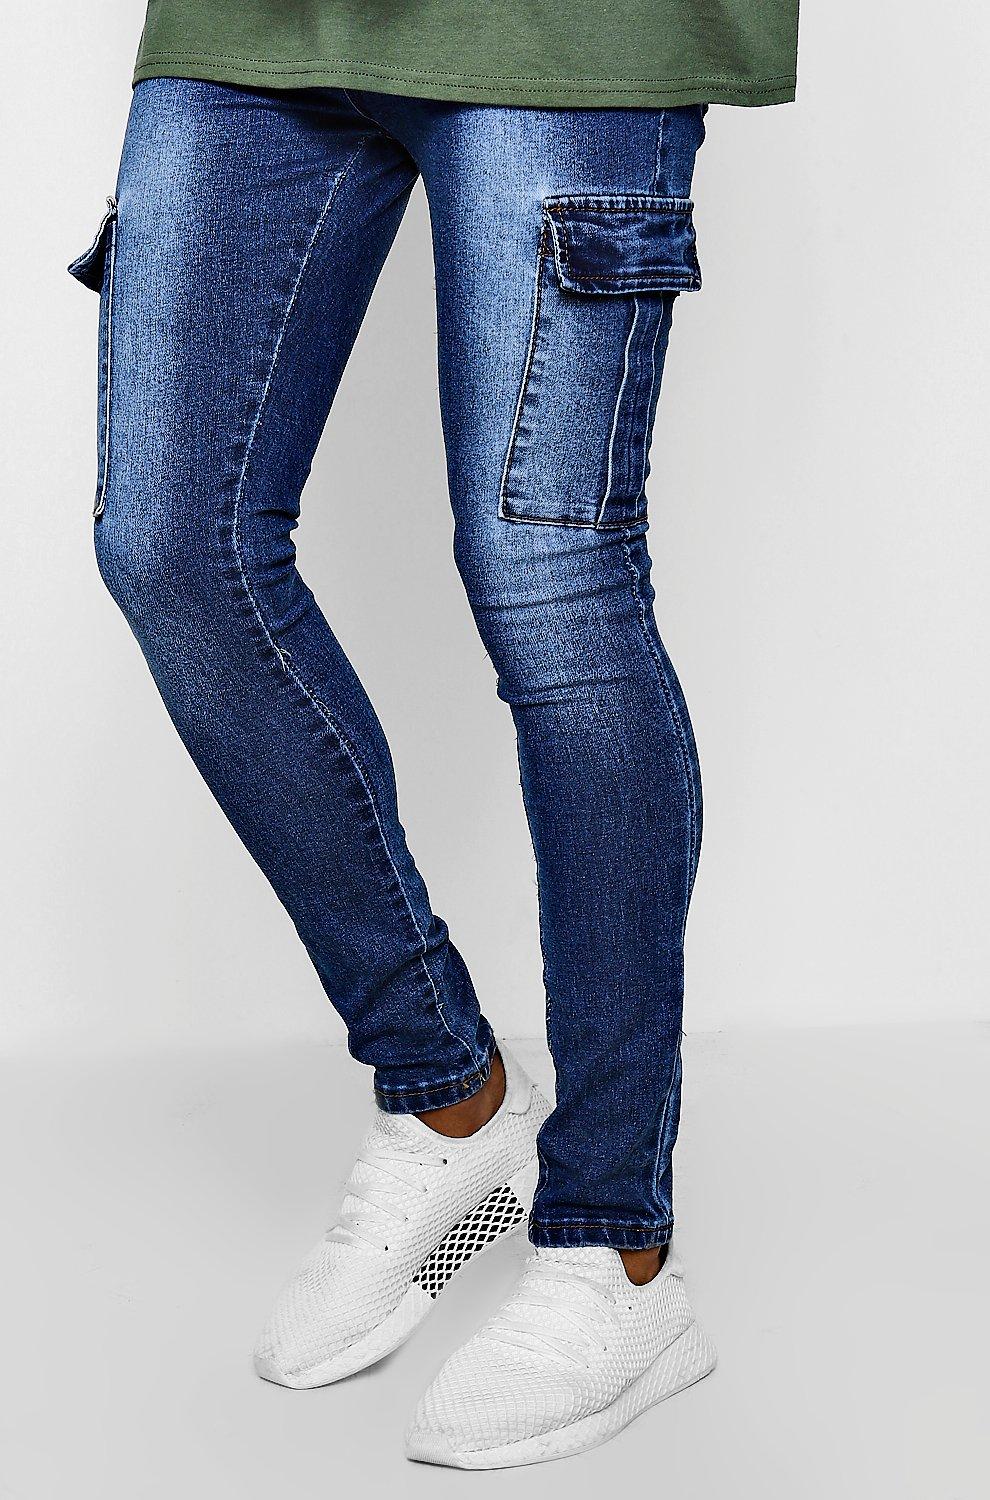 denim jeans with cargo pockets